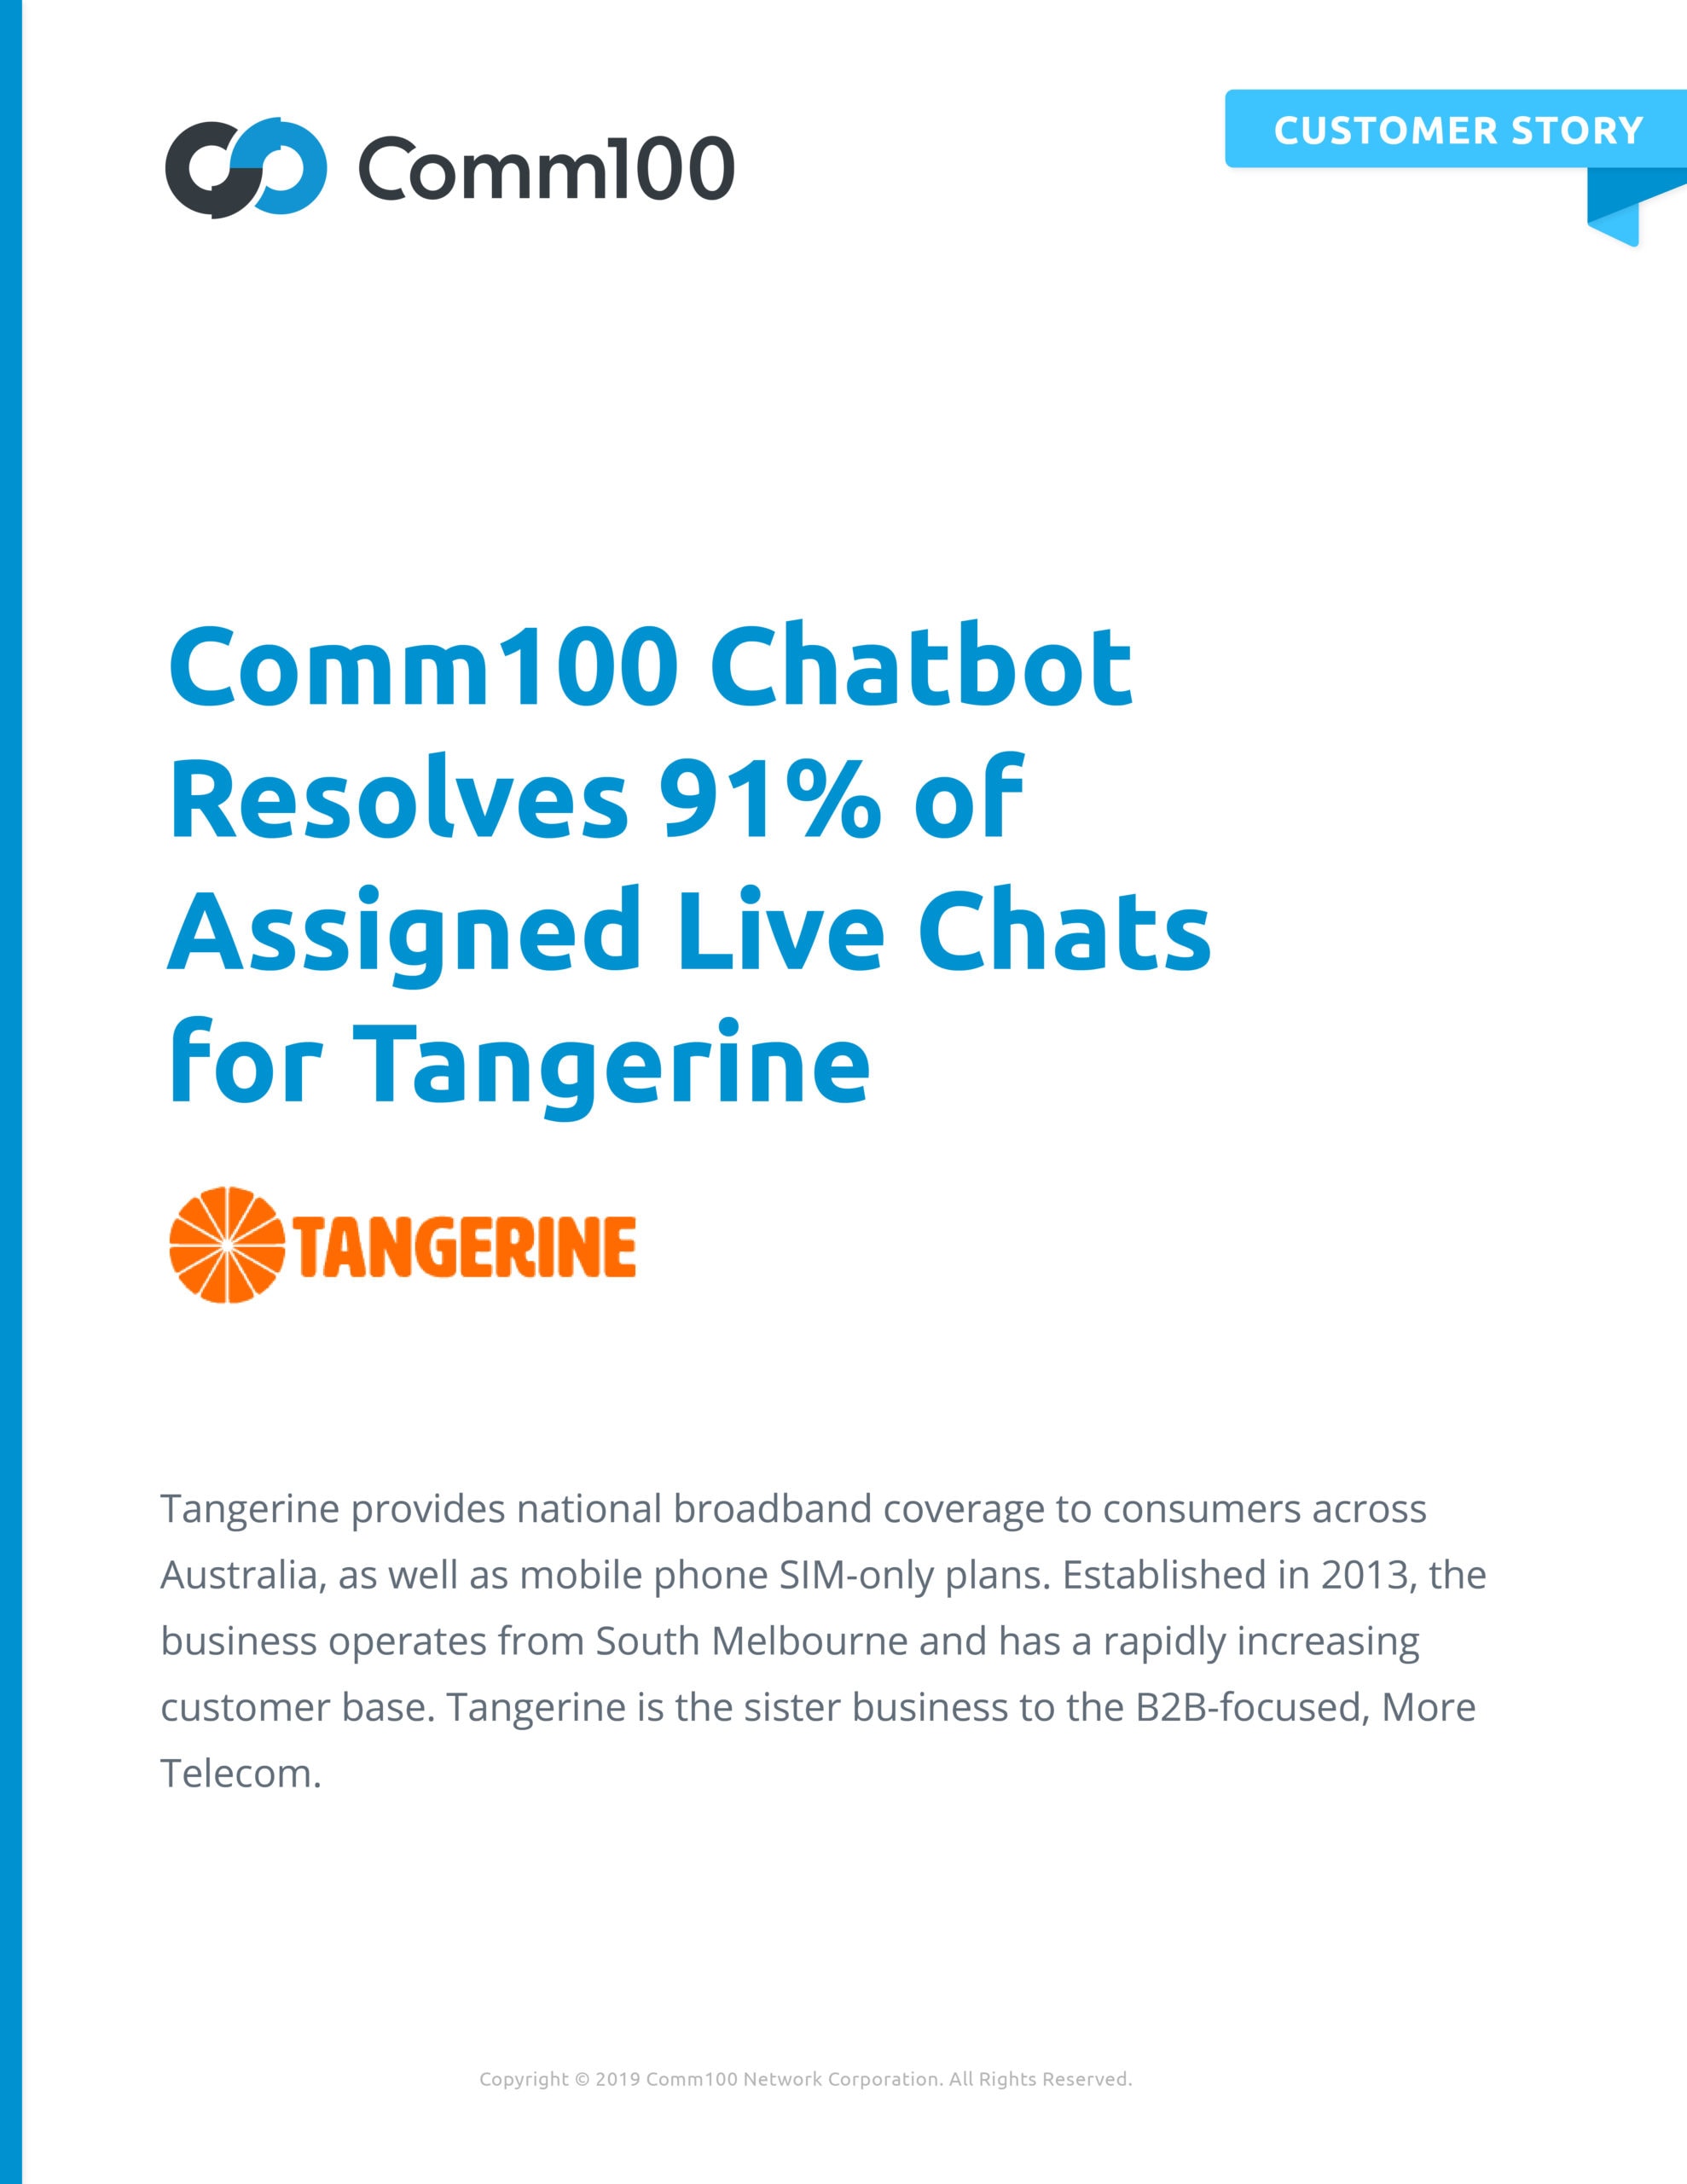 comm100 tangerine chatbot